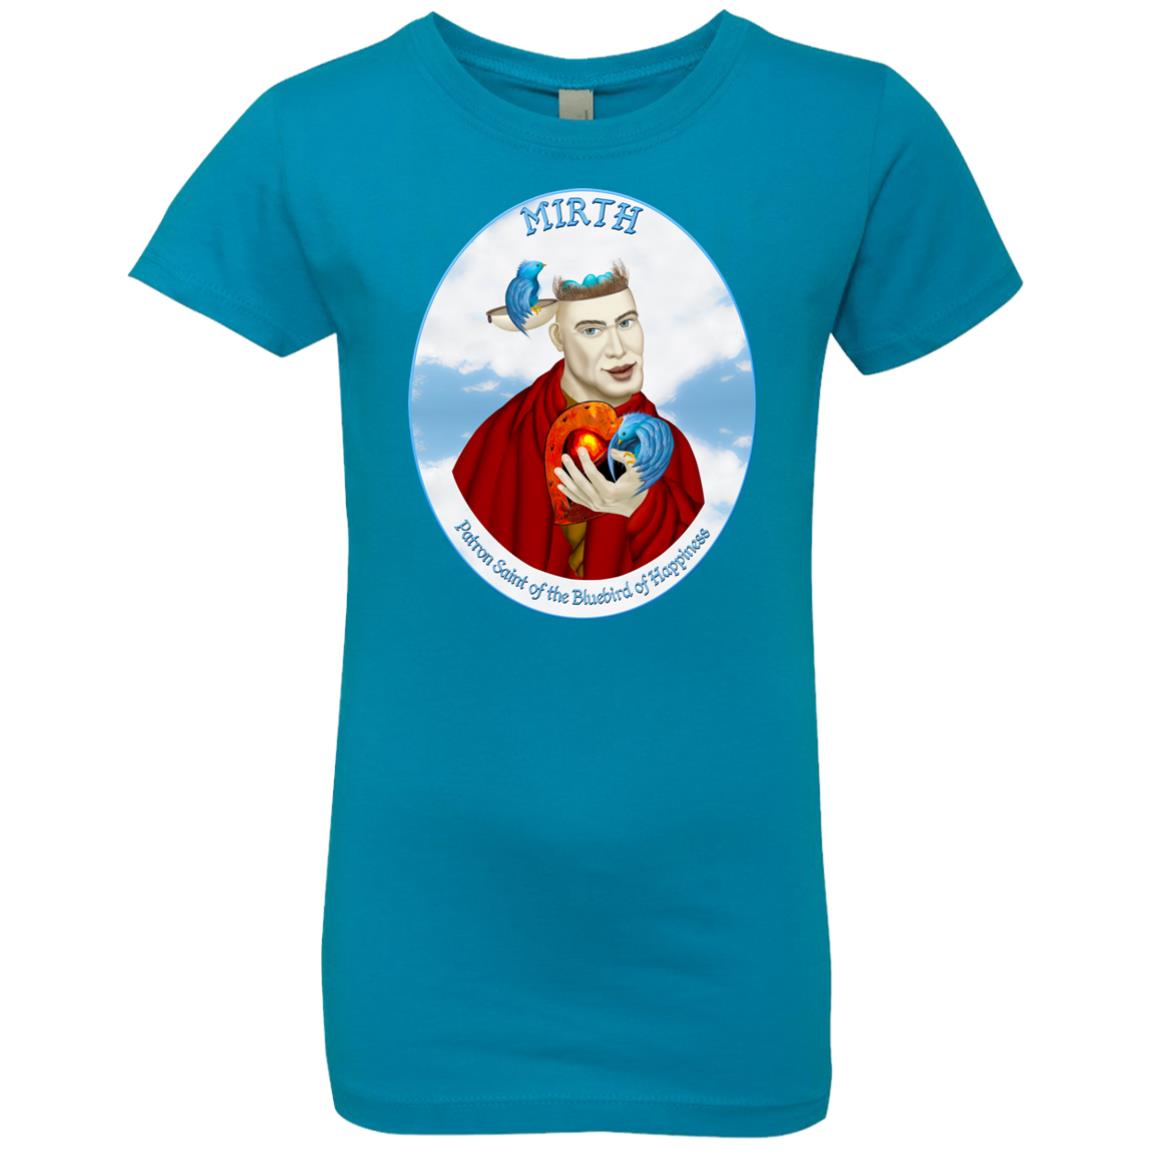 MIRTH - Oval - Girl's Premium Cotton T-Shirt